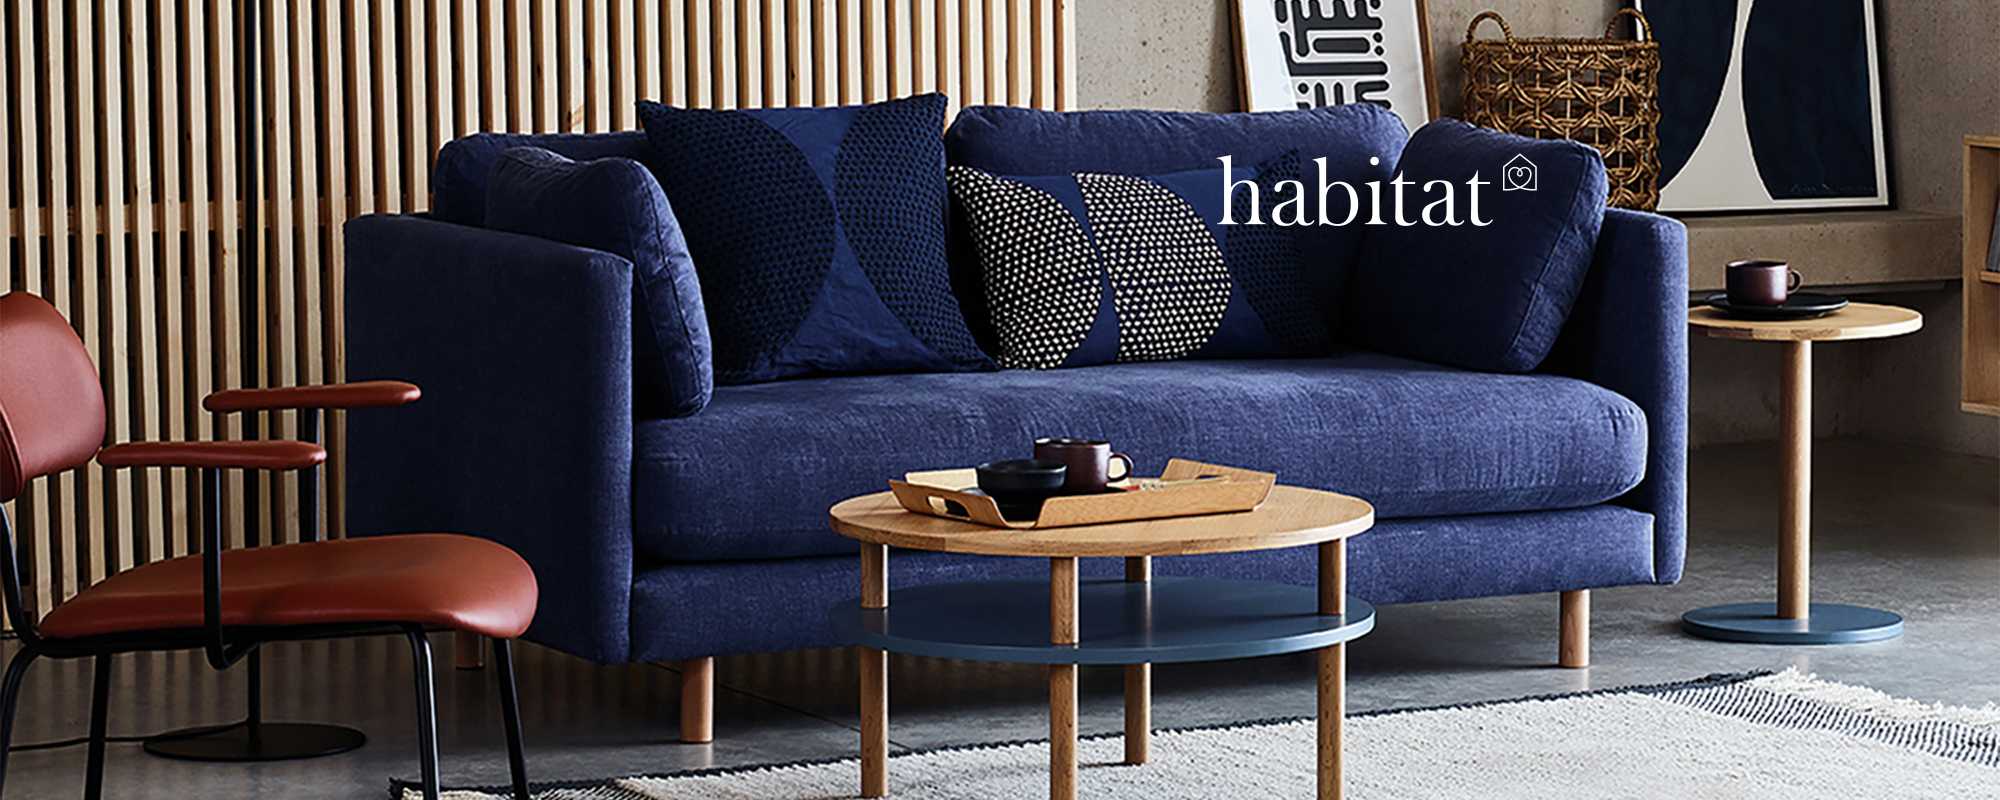  Habitat. Original designs at surprisingly affordable prices.